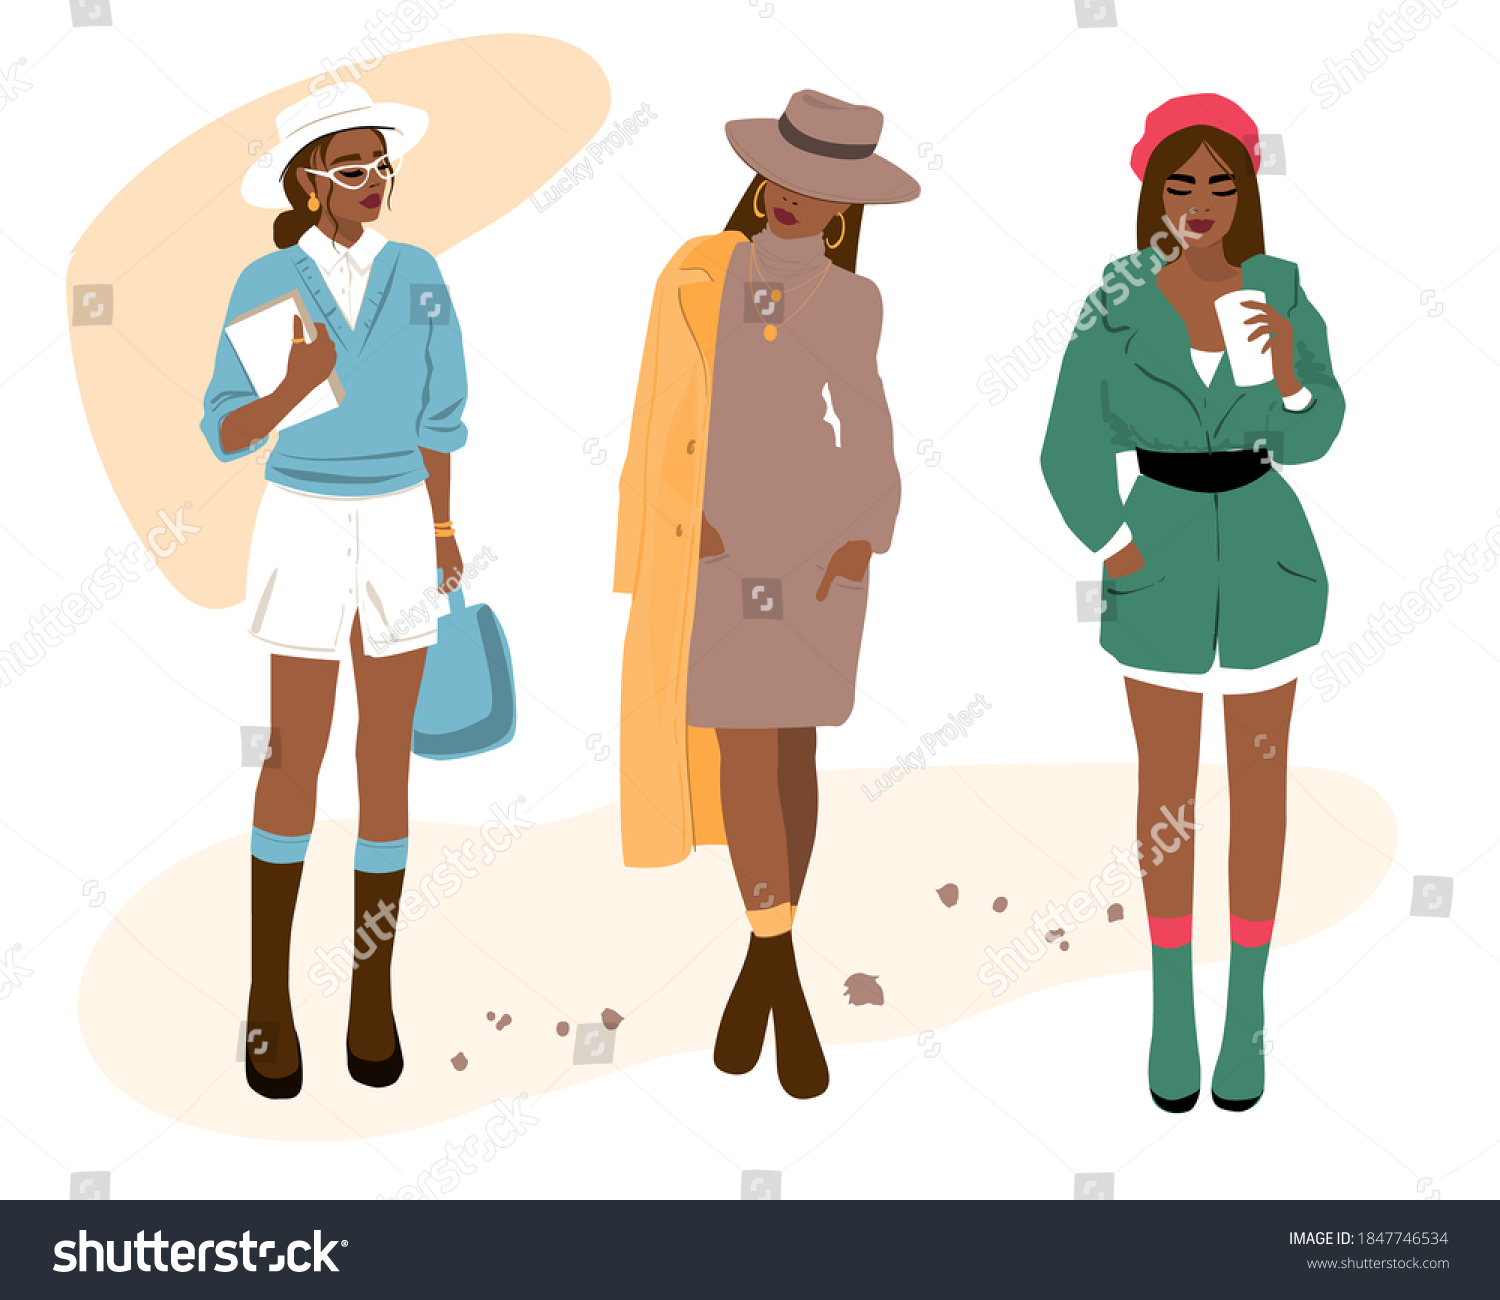 Set of fashion girls on a white background. Vector flat style illustration. Avatar icon #1847746534